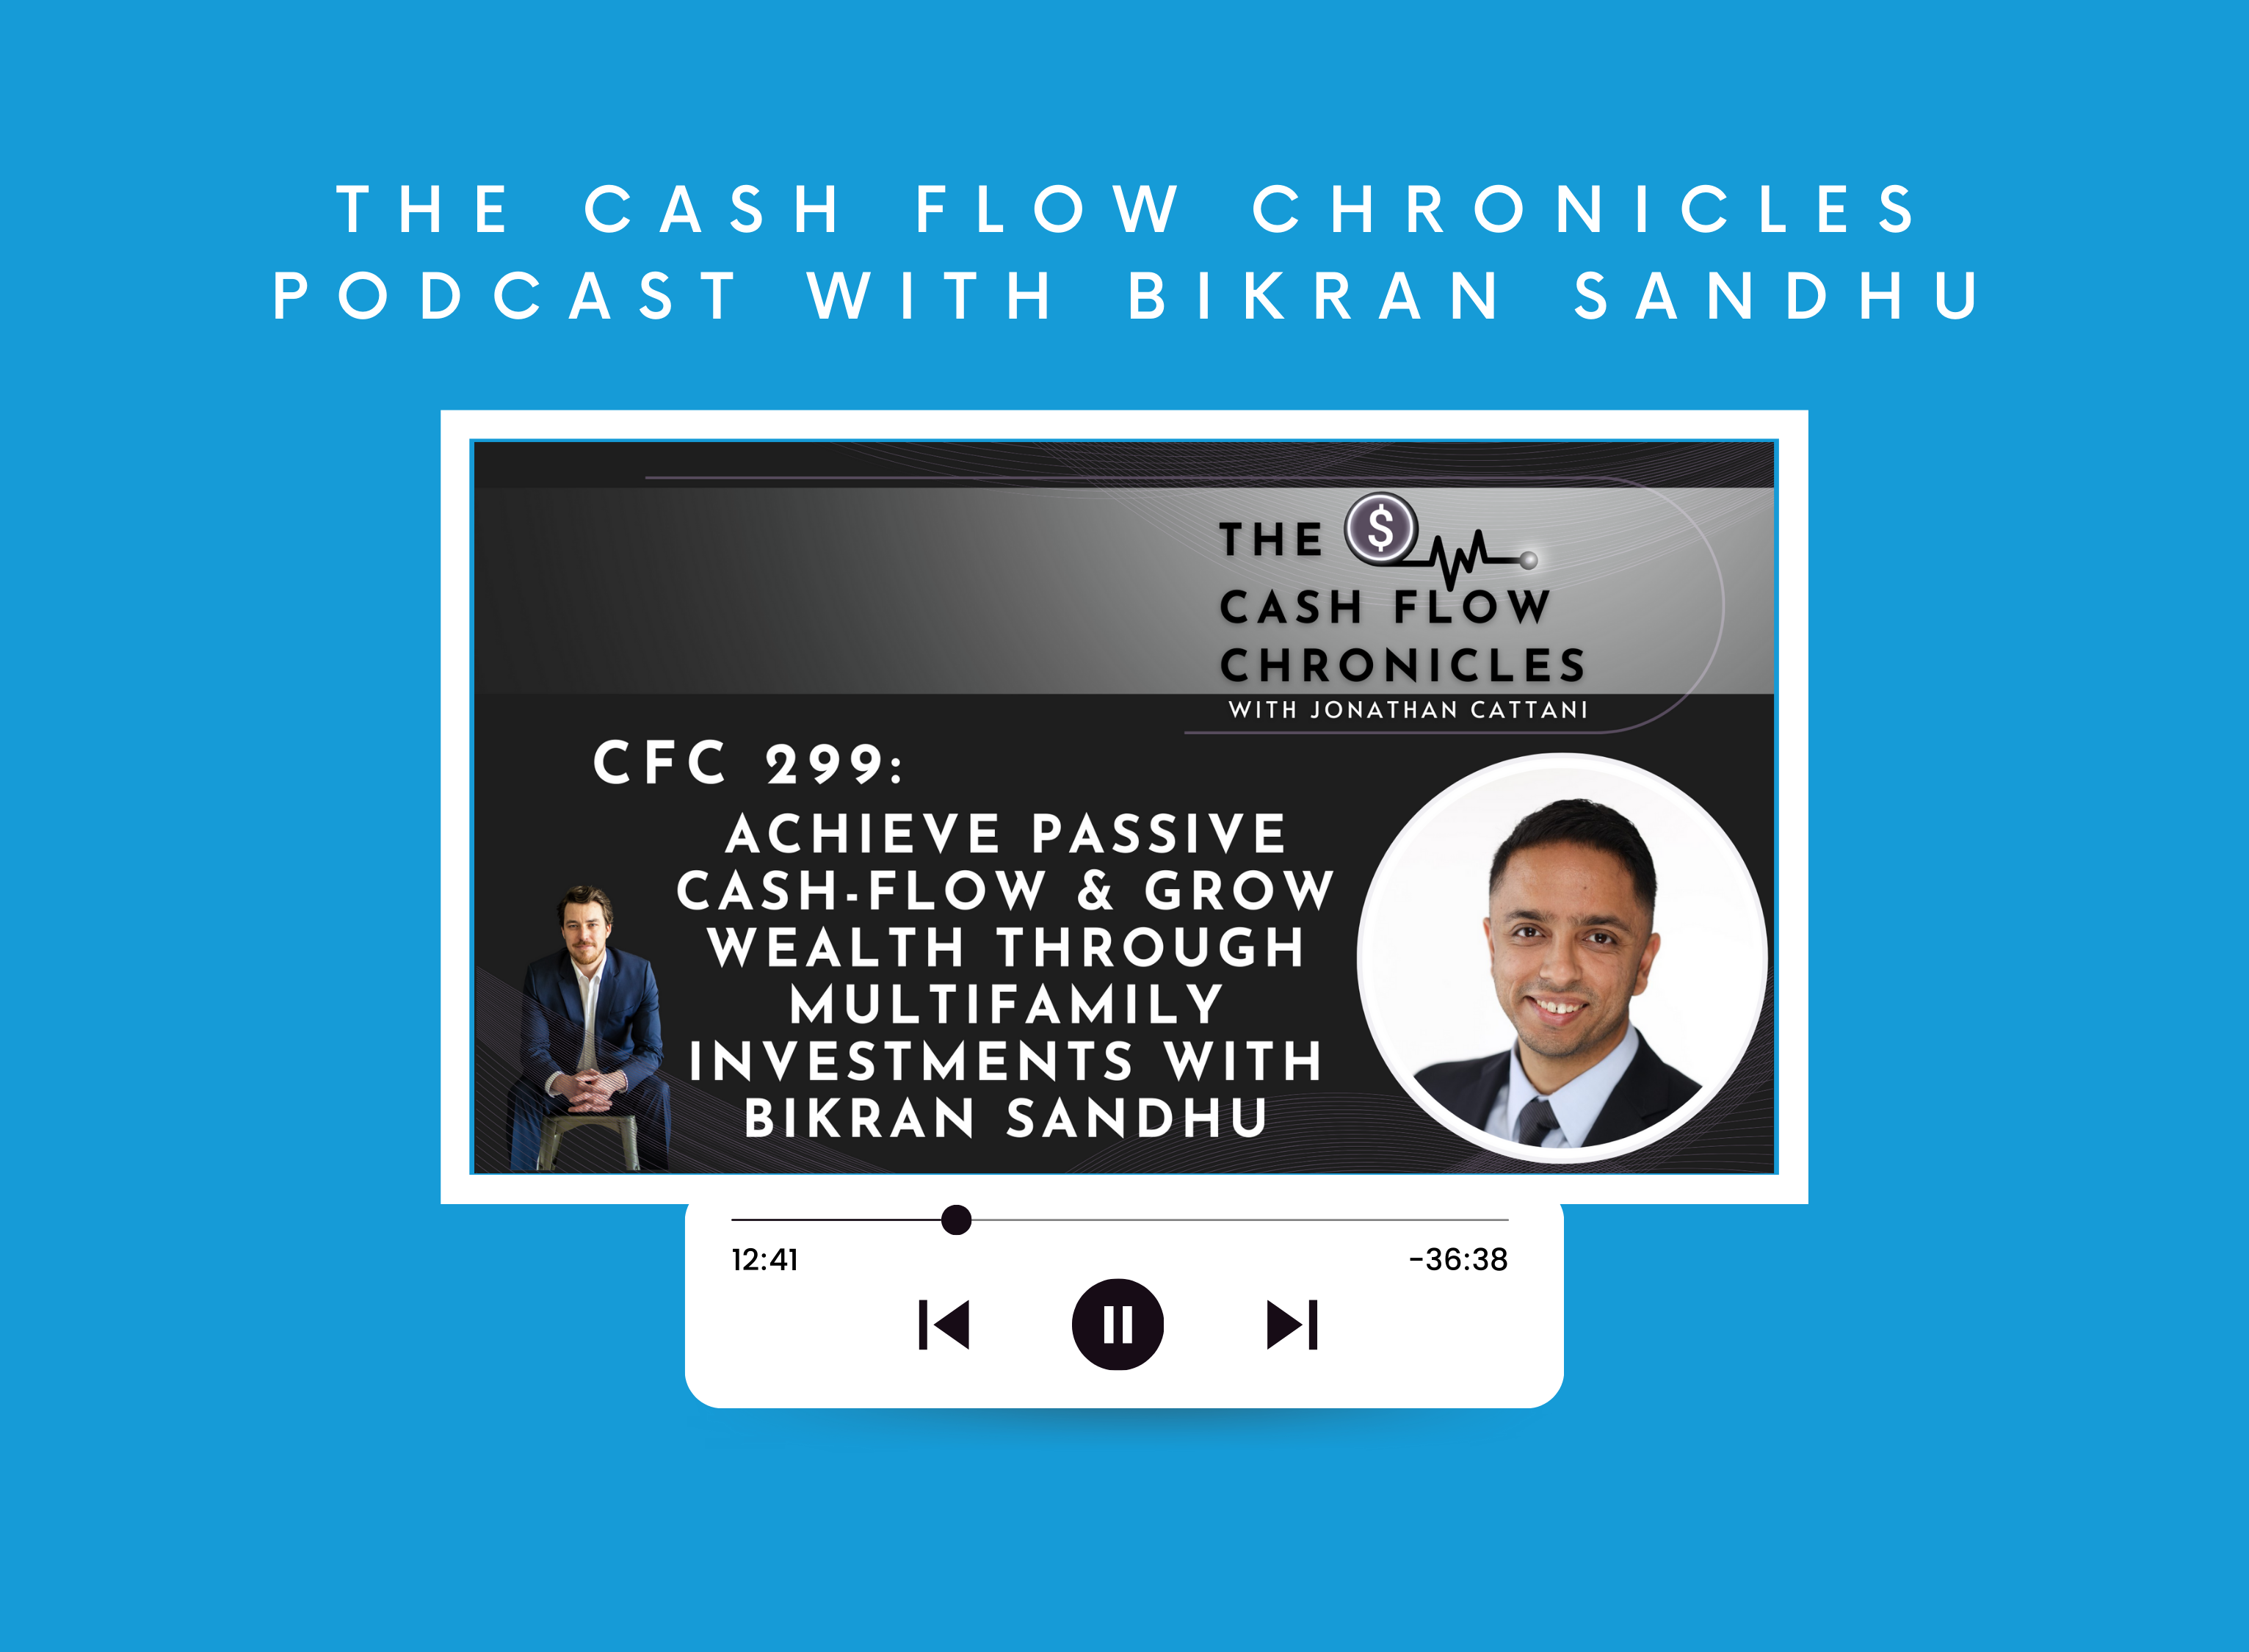 The Cash Flow Chronicles Podcast with Bikran Sandhu